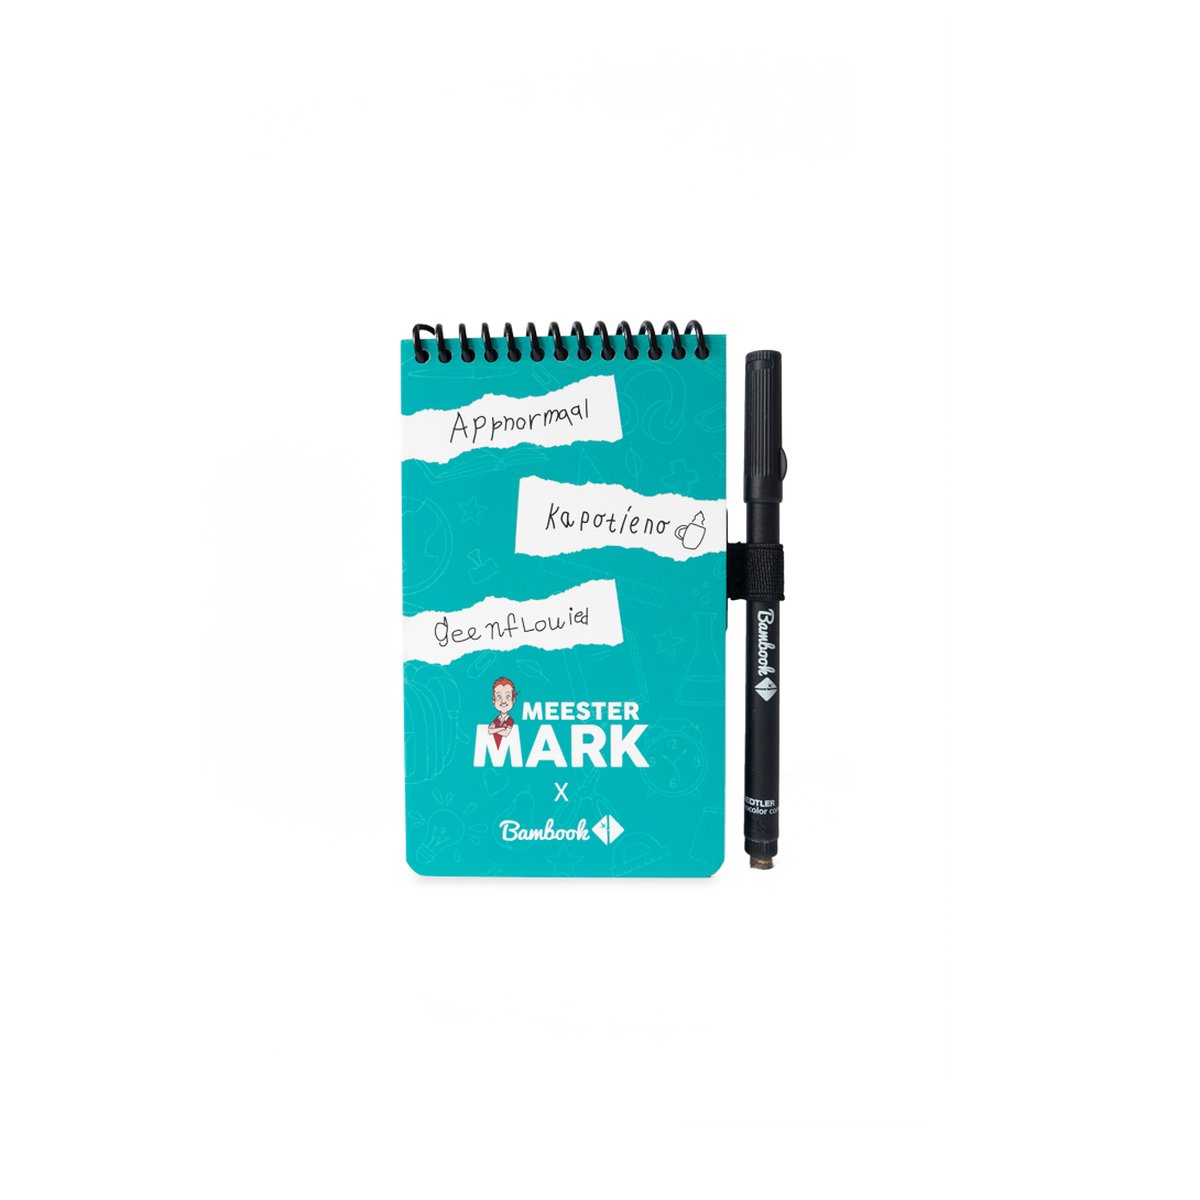 Meester Mark & Bambook Pocket notitieboek - Limited Edition